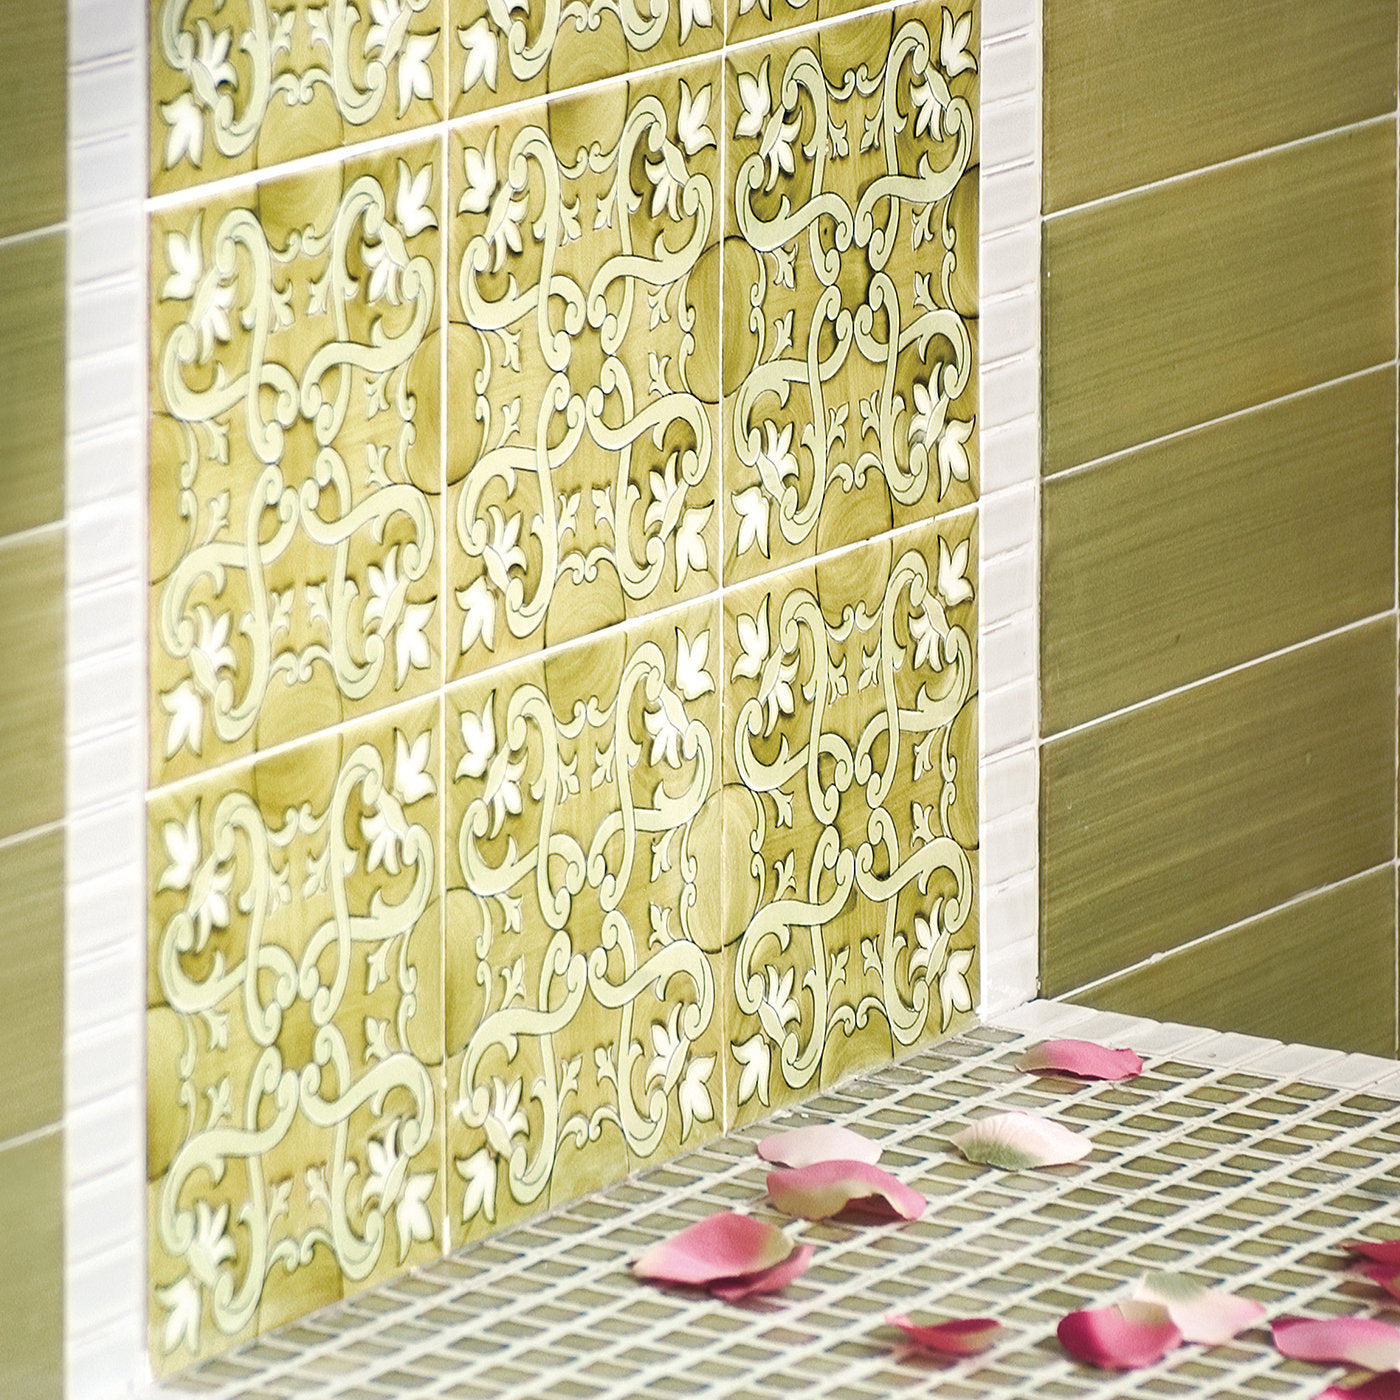 Set of 25 Recamone Green Tiles Fiori Scuri Collection  - Alternative view 2